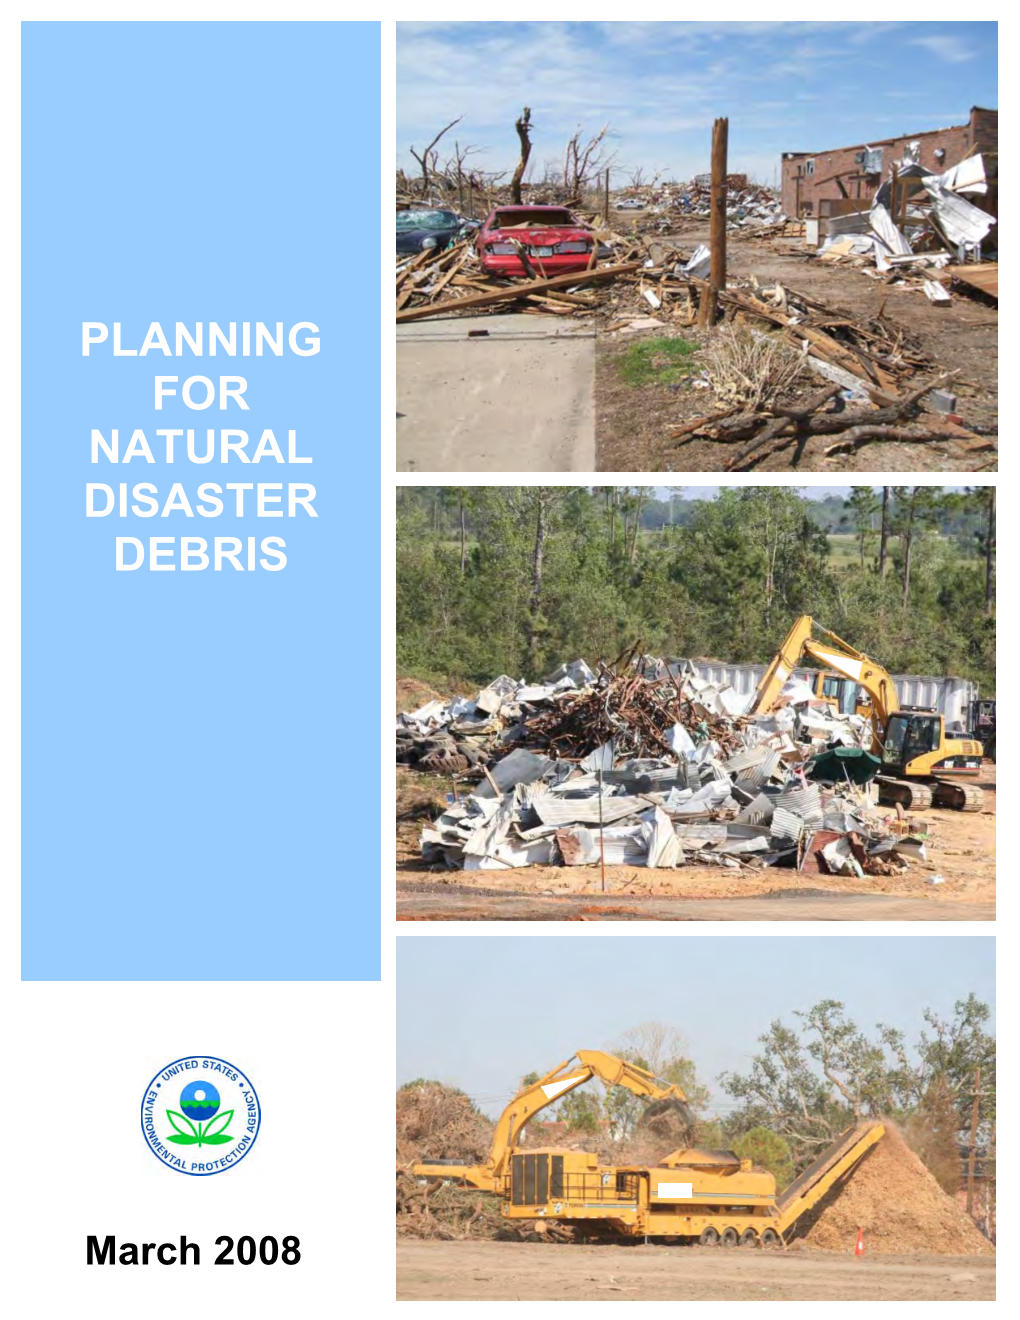 Planning for Natural Disaster Debris, March 2008